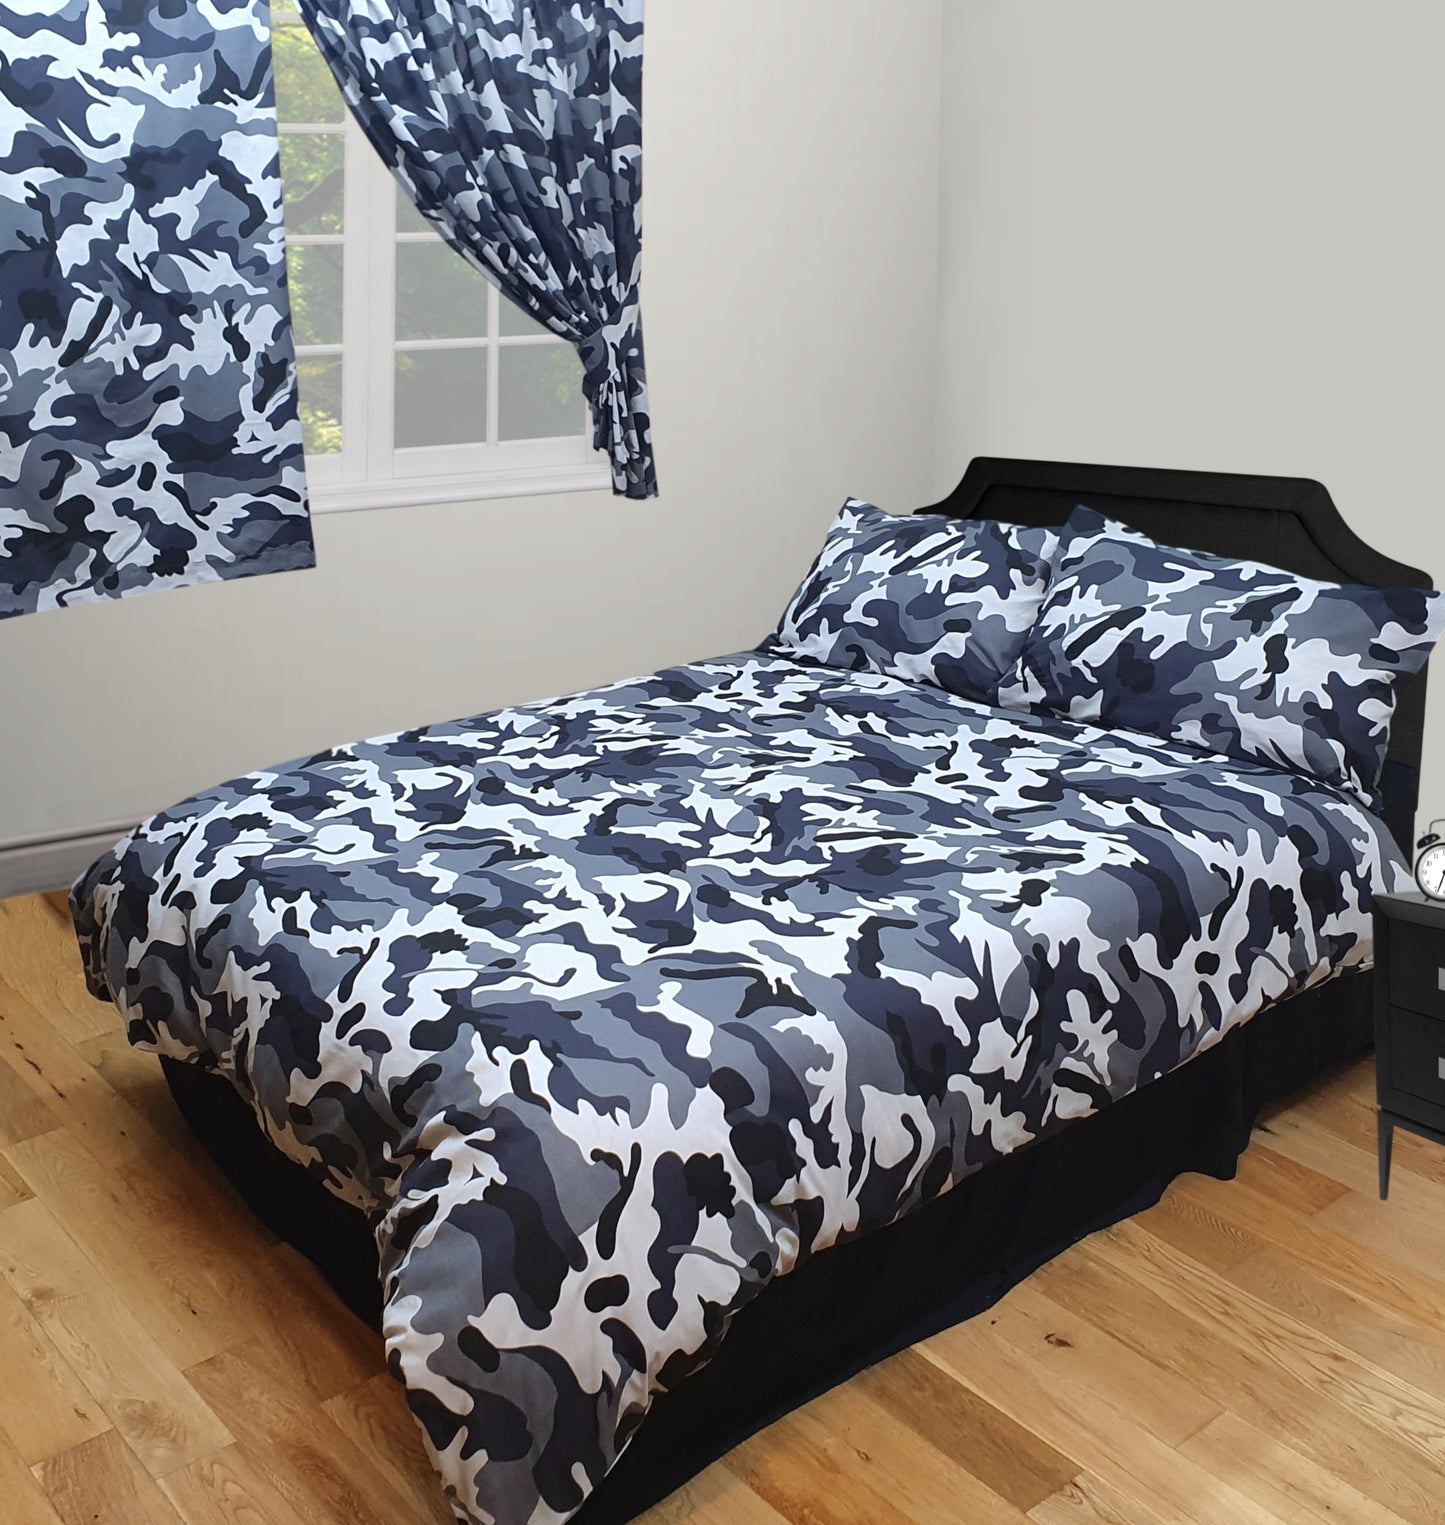 Single Bed Camouflage Black White Duvet Cover Set